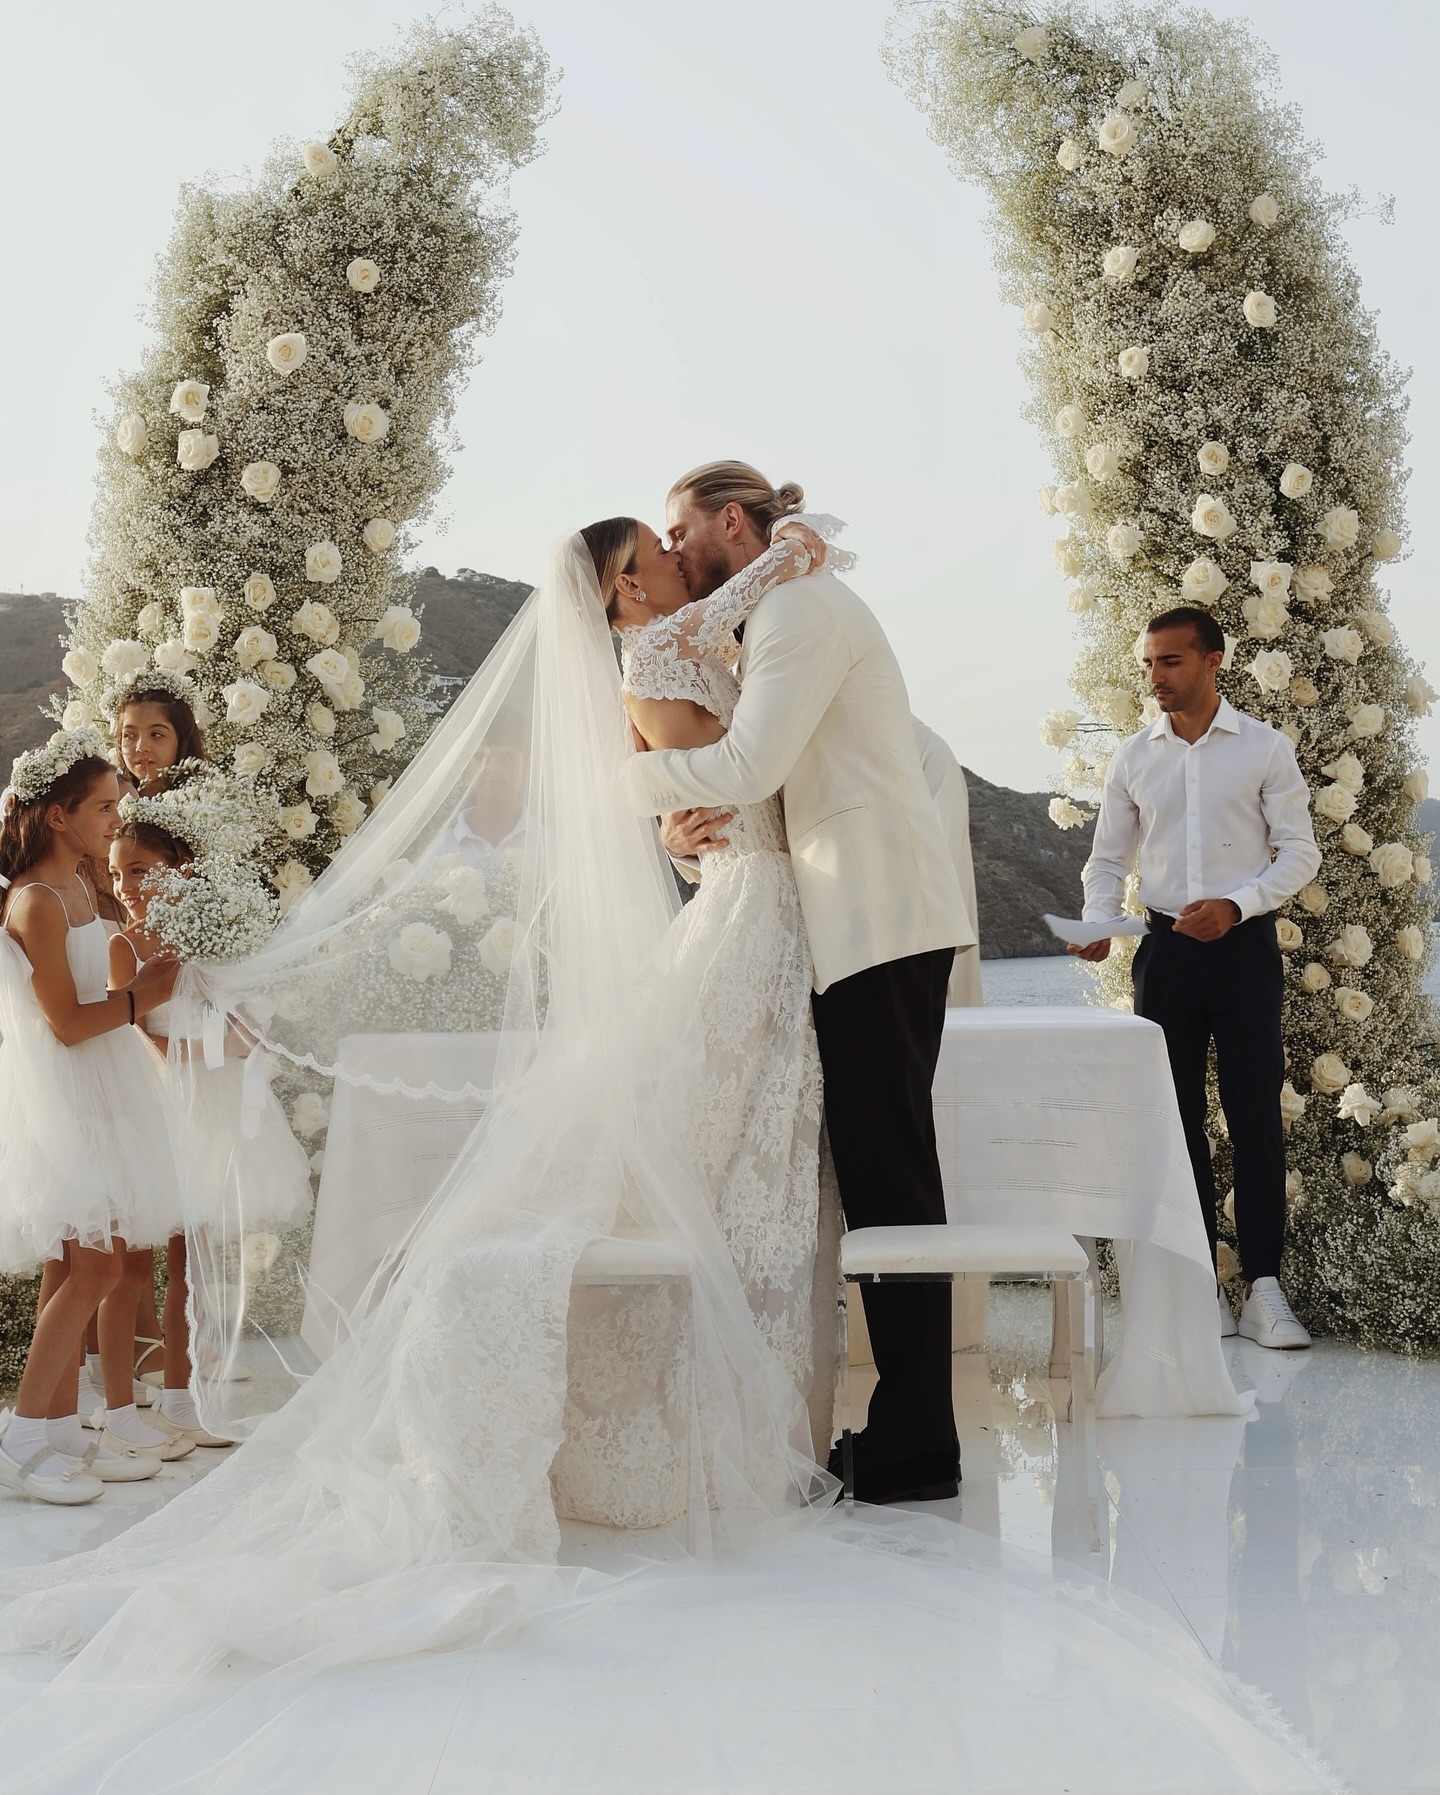 Loris Karius married TV presenter Diletta Leotta in a beautiful Sicilian ceremony